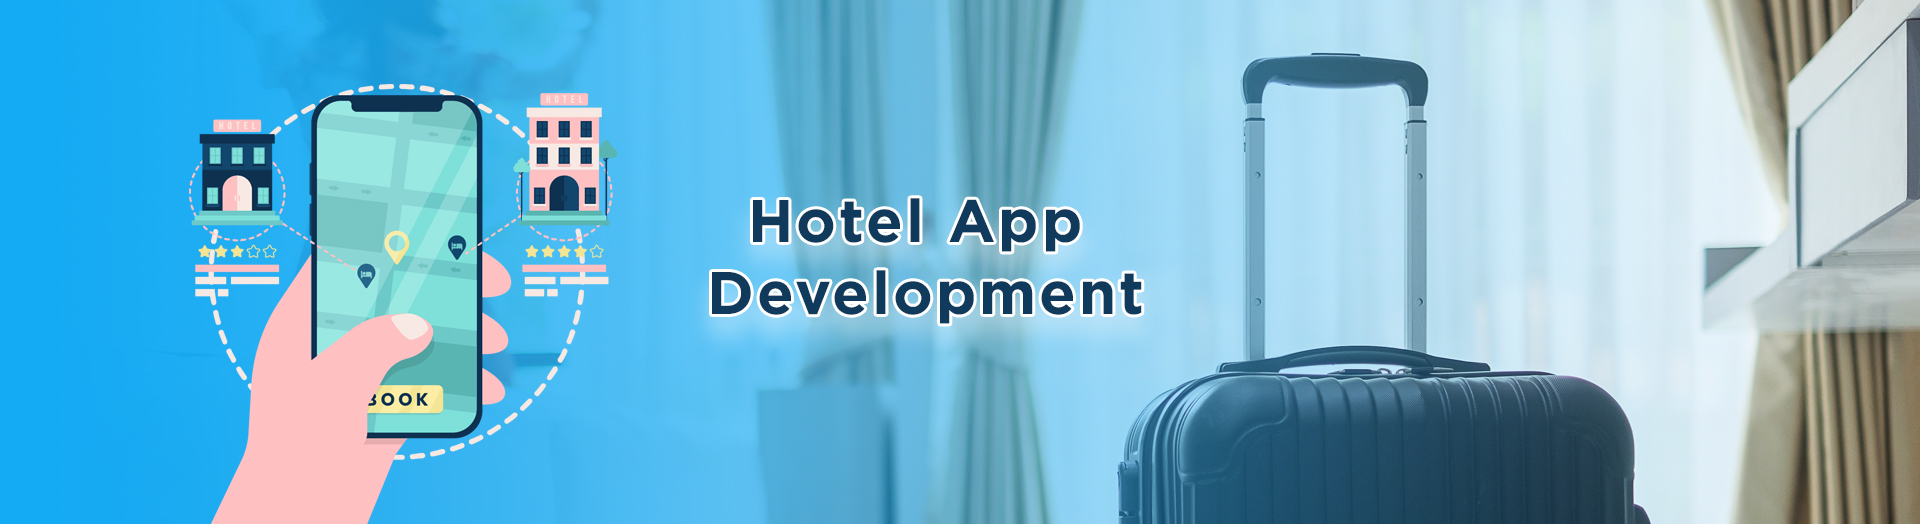 Hotel App Development